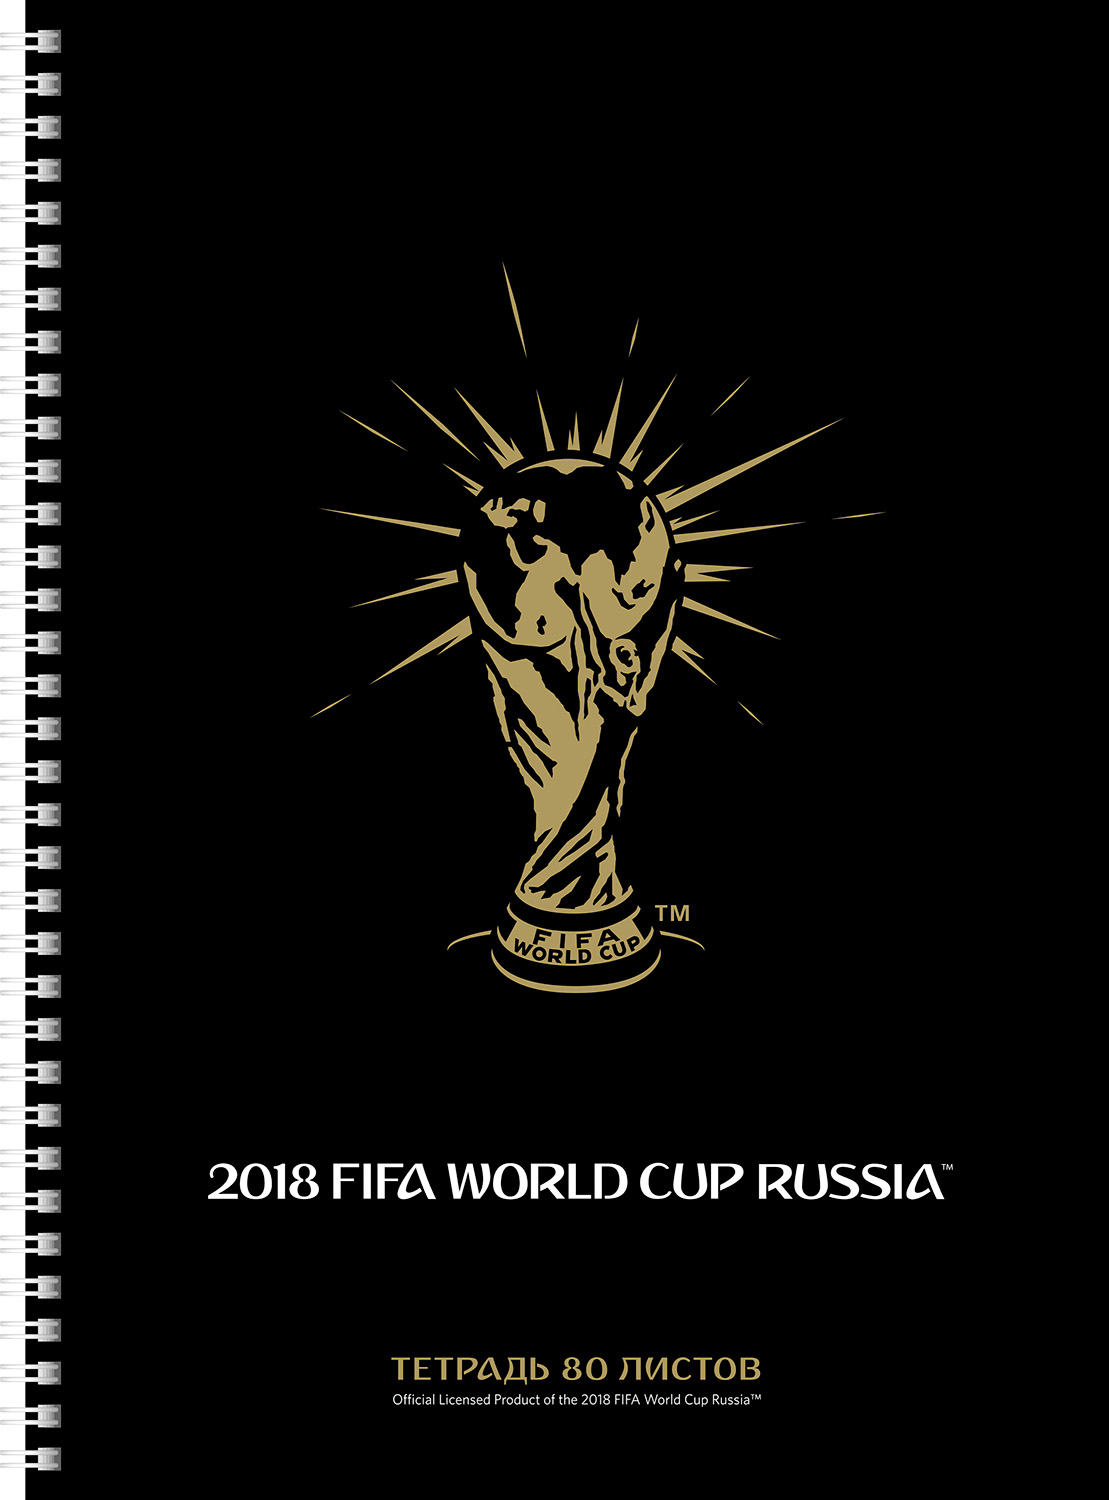 FIFA-2018 Тетрадь ЧМ по футболу 2018 Золотой кубок 80 листов 80Тт4A1гр_17485